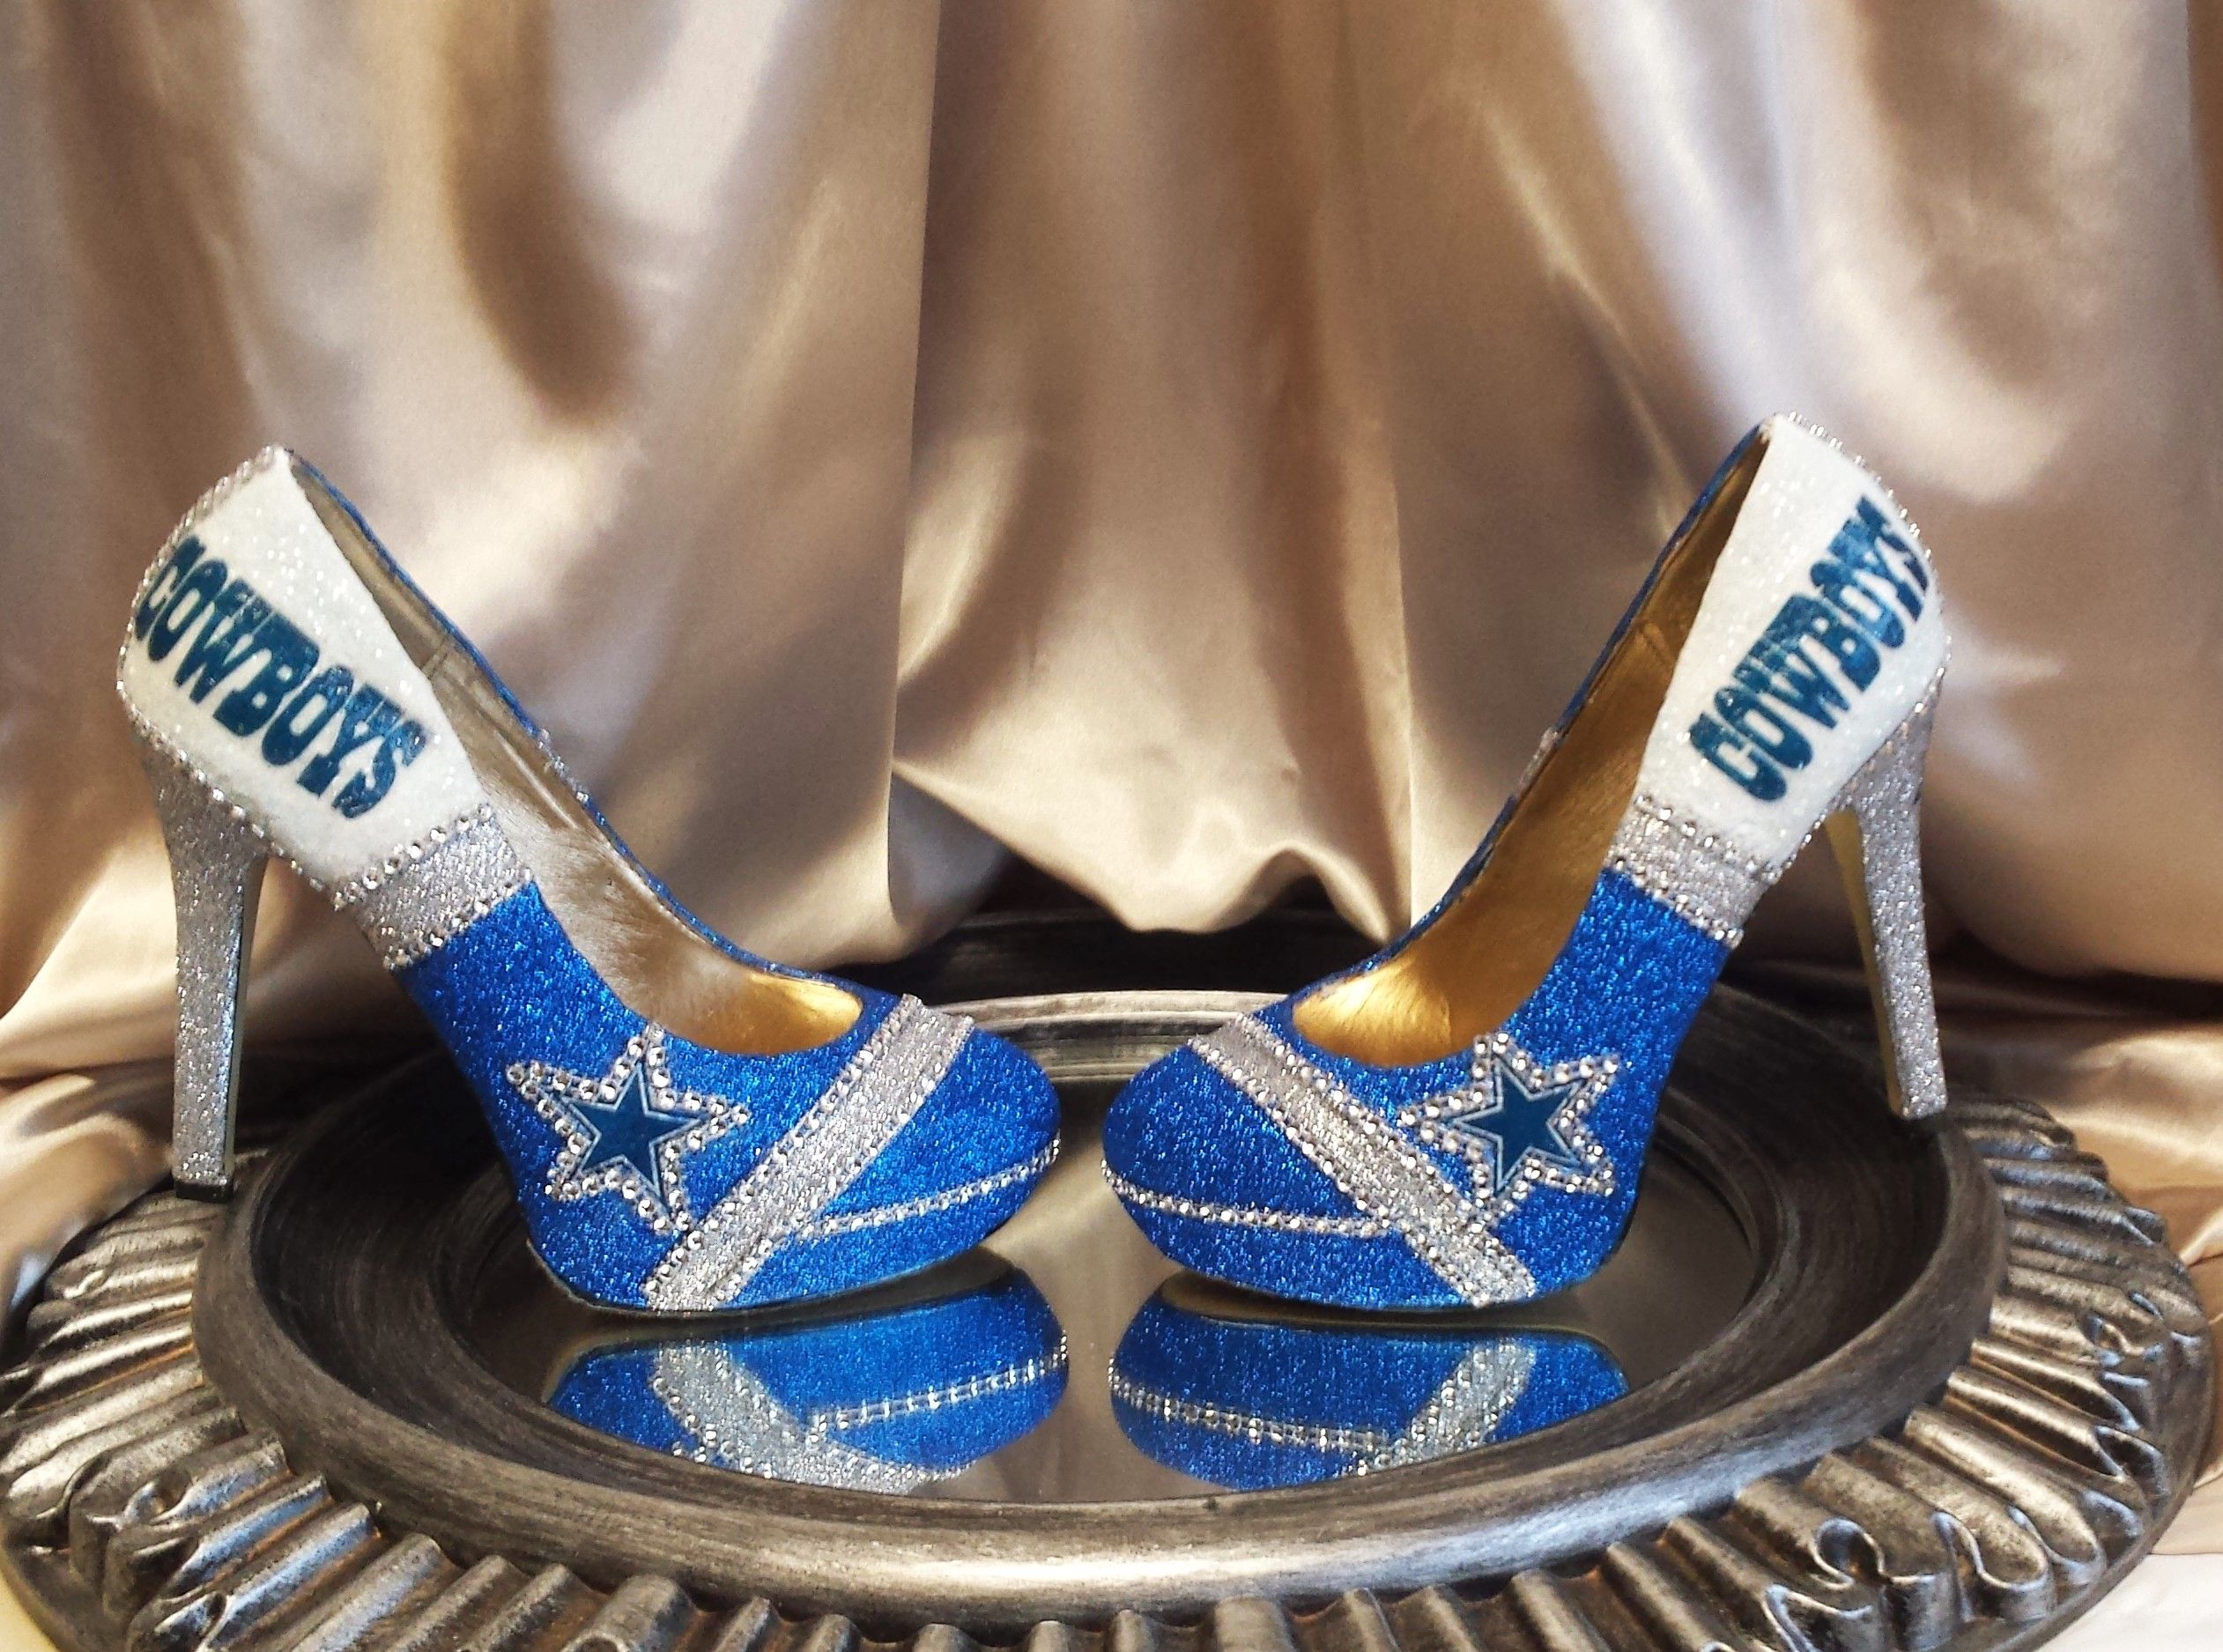 claire hardwick recommends Dallas Cowboys Stiletto Heels